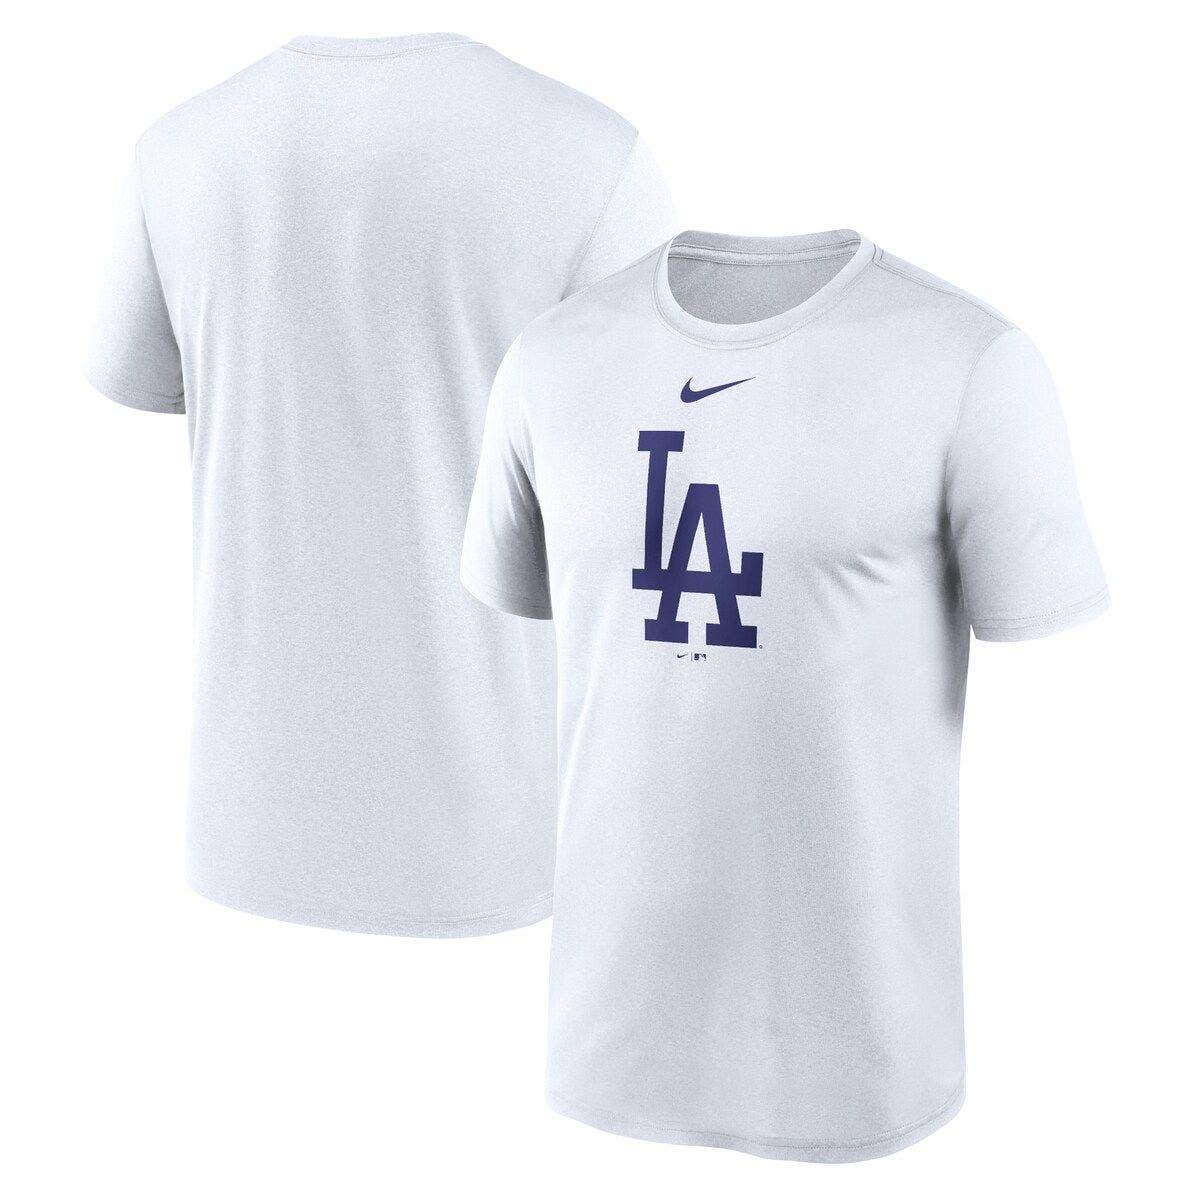 Nike Next Level (MLB Los Angeles Dodgers) Men's Polo